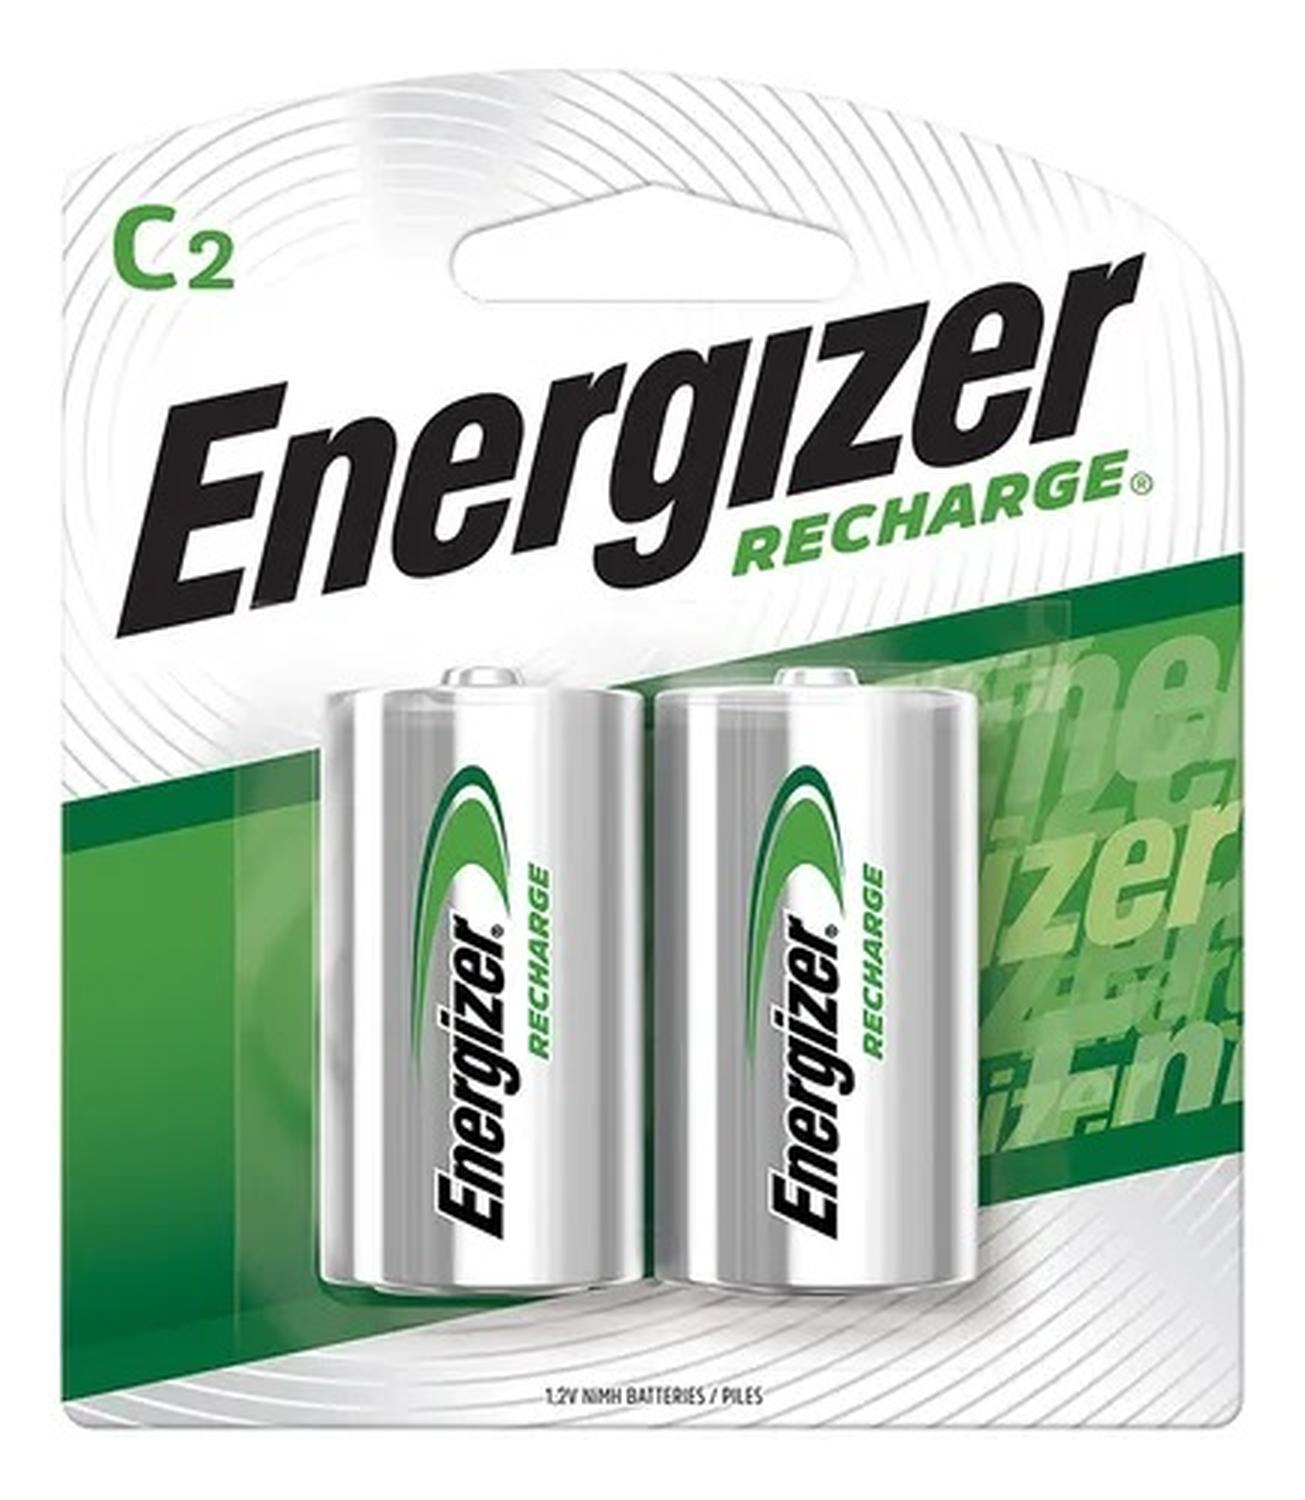 Cargador Universal Energizer + Pilas C2, D2, 9V Energizer